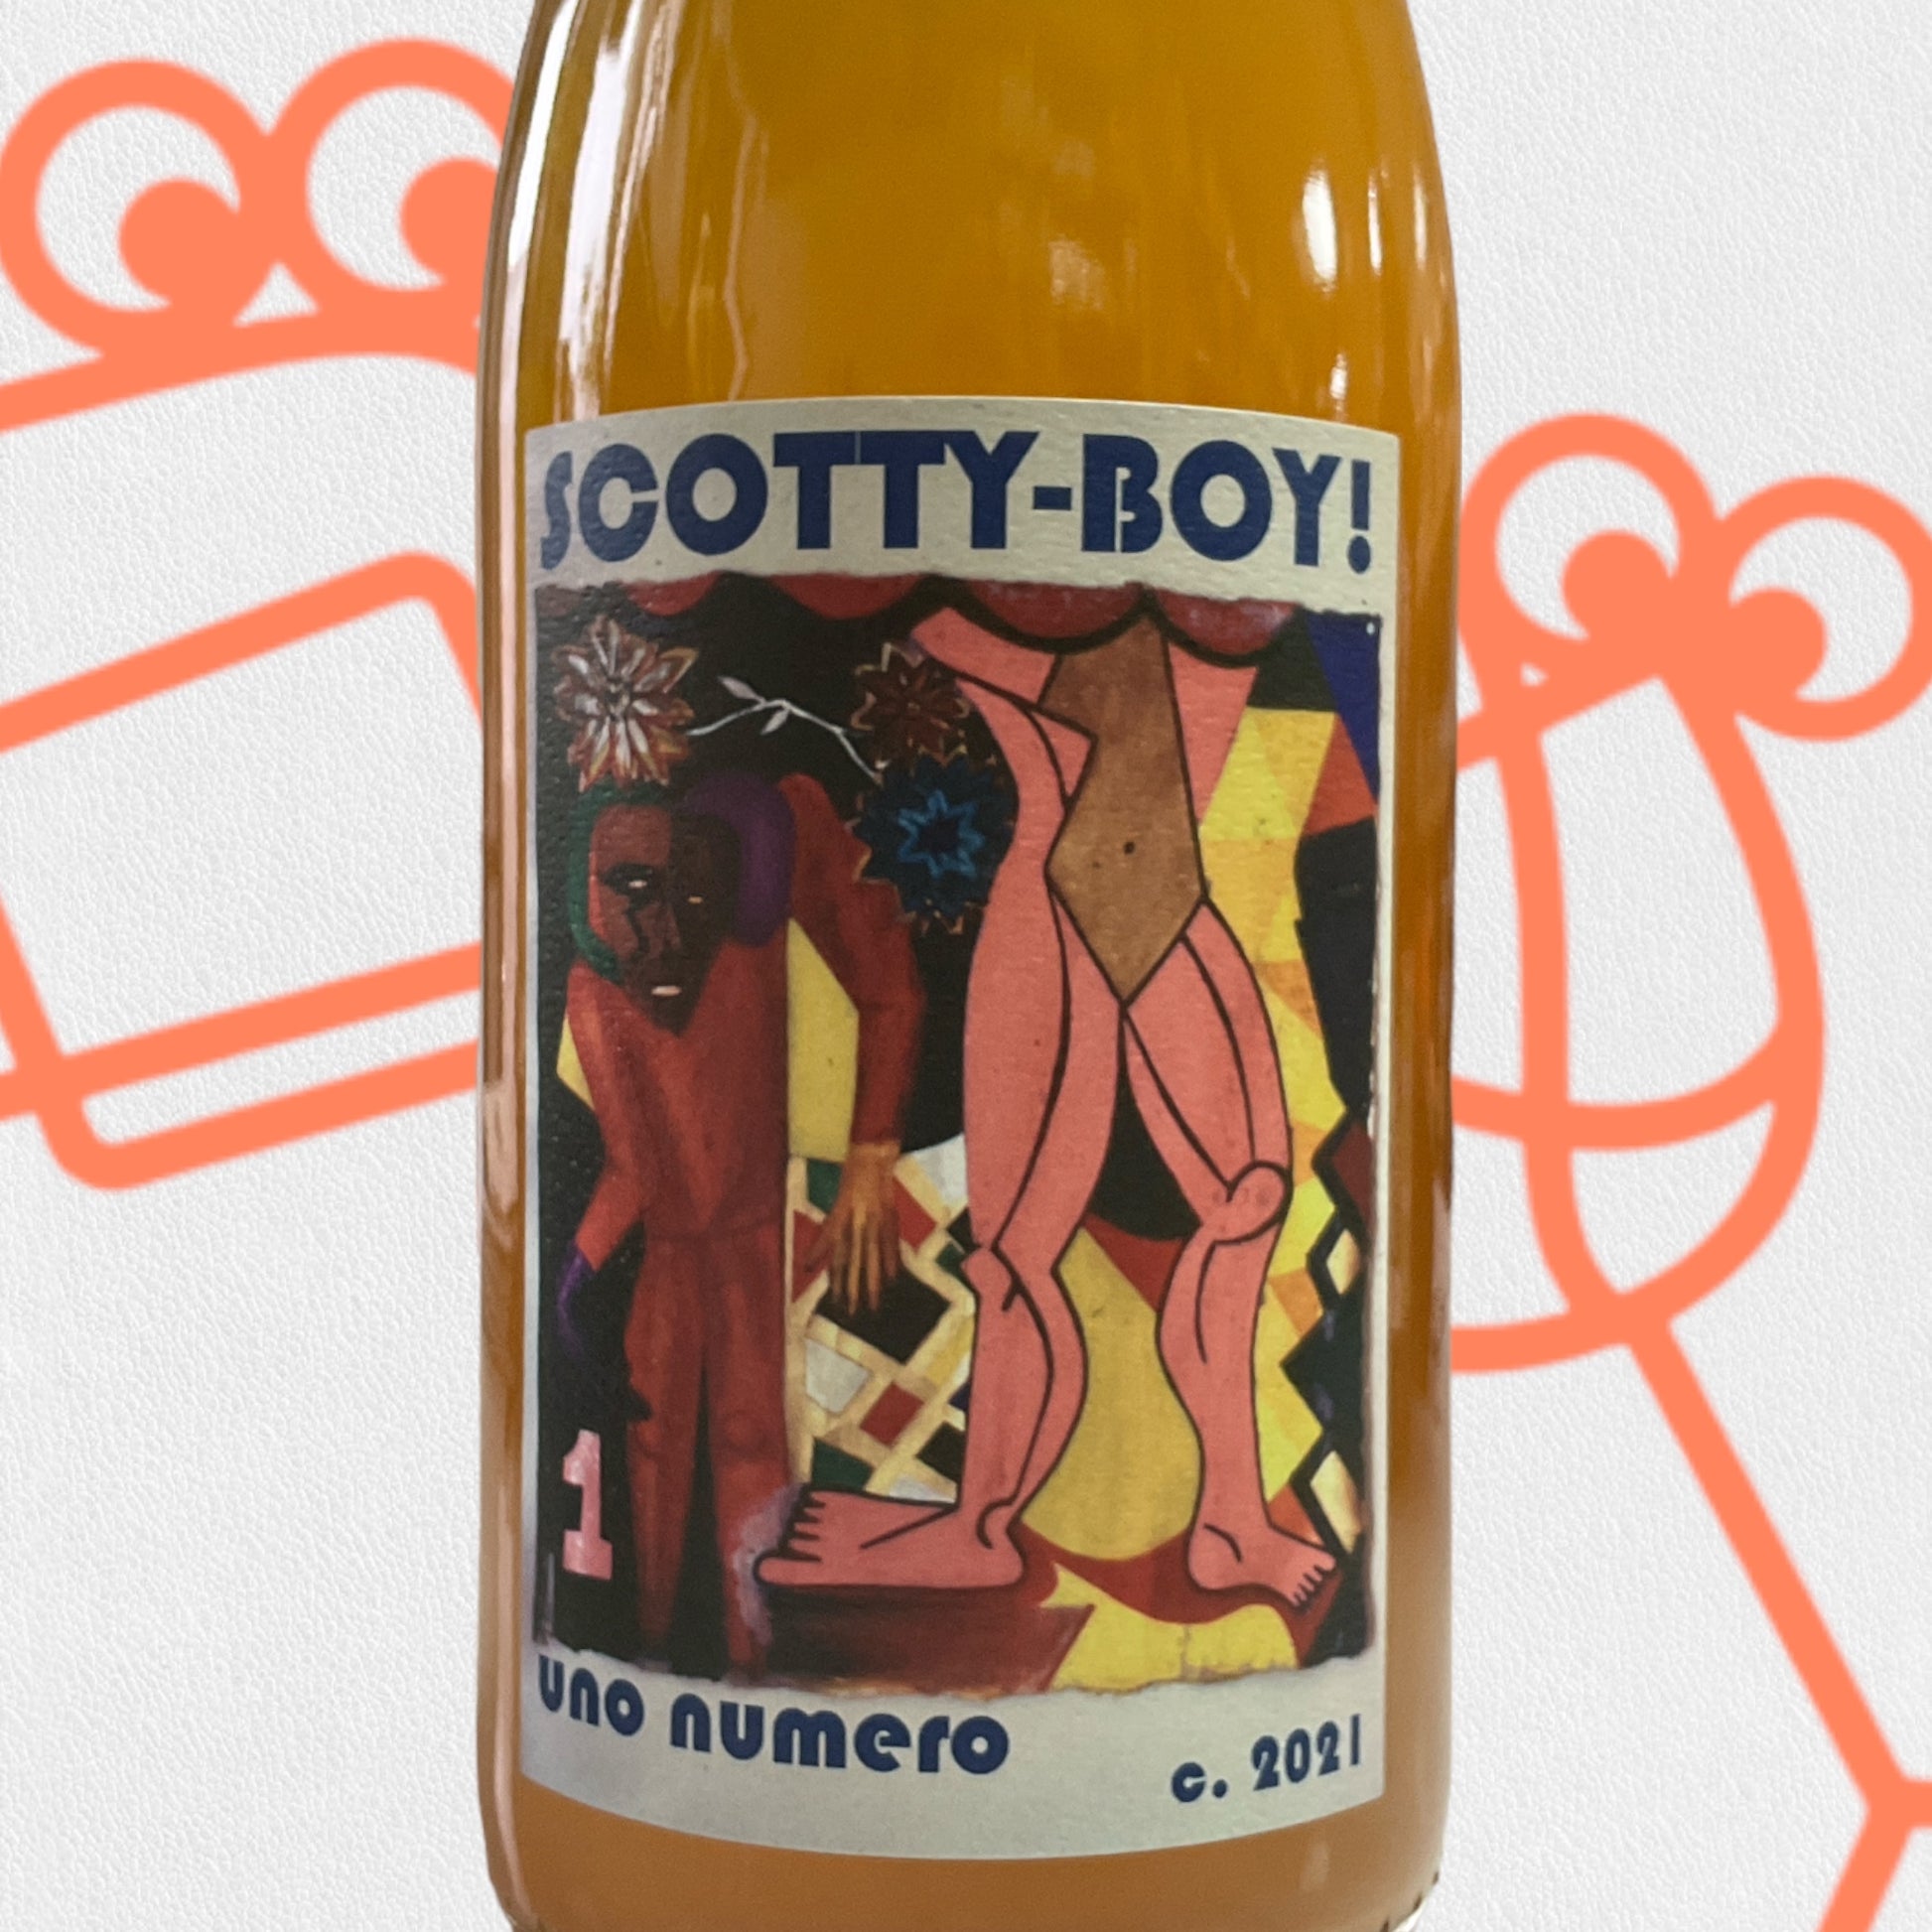 Scotty Boy! 'Uno Numero' 2021 Santa Barbara, California - Williston Park Wines & Spirits